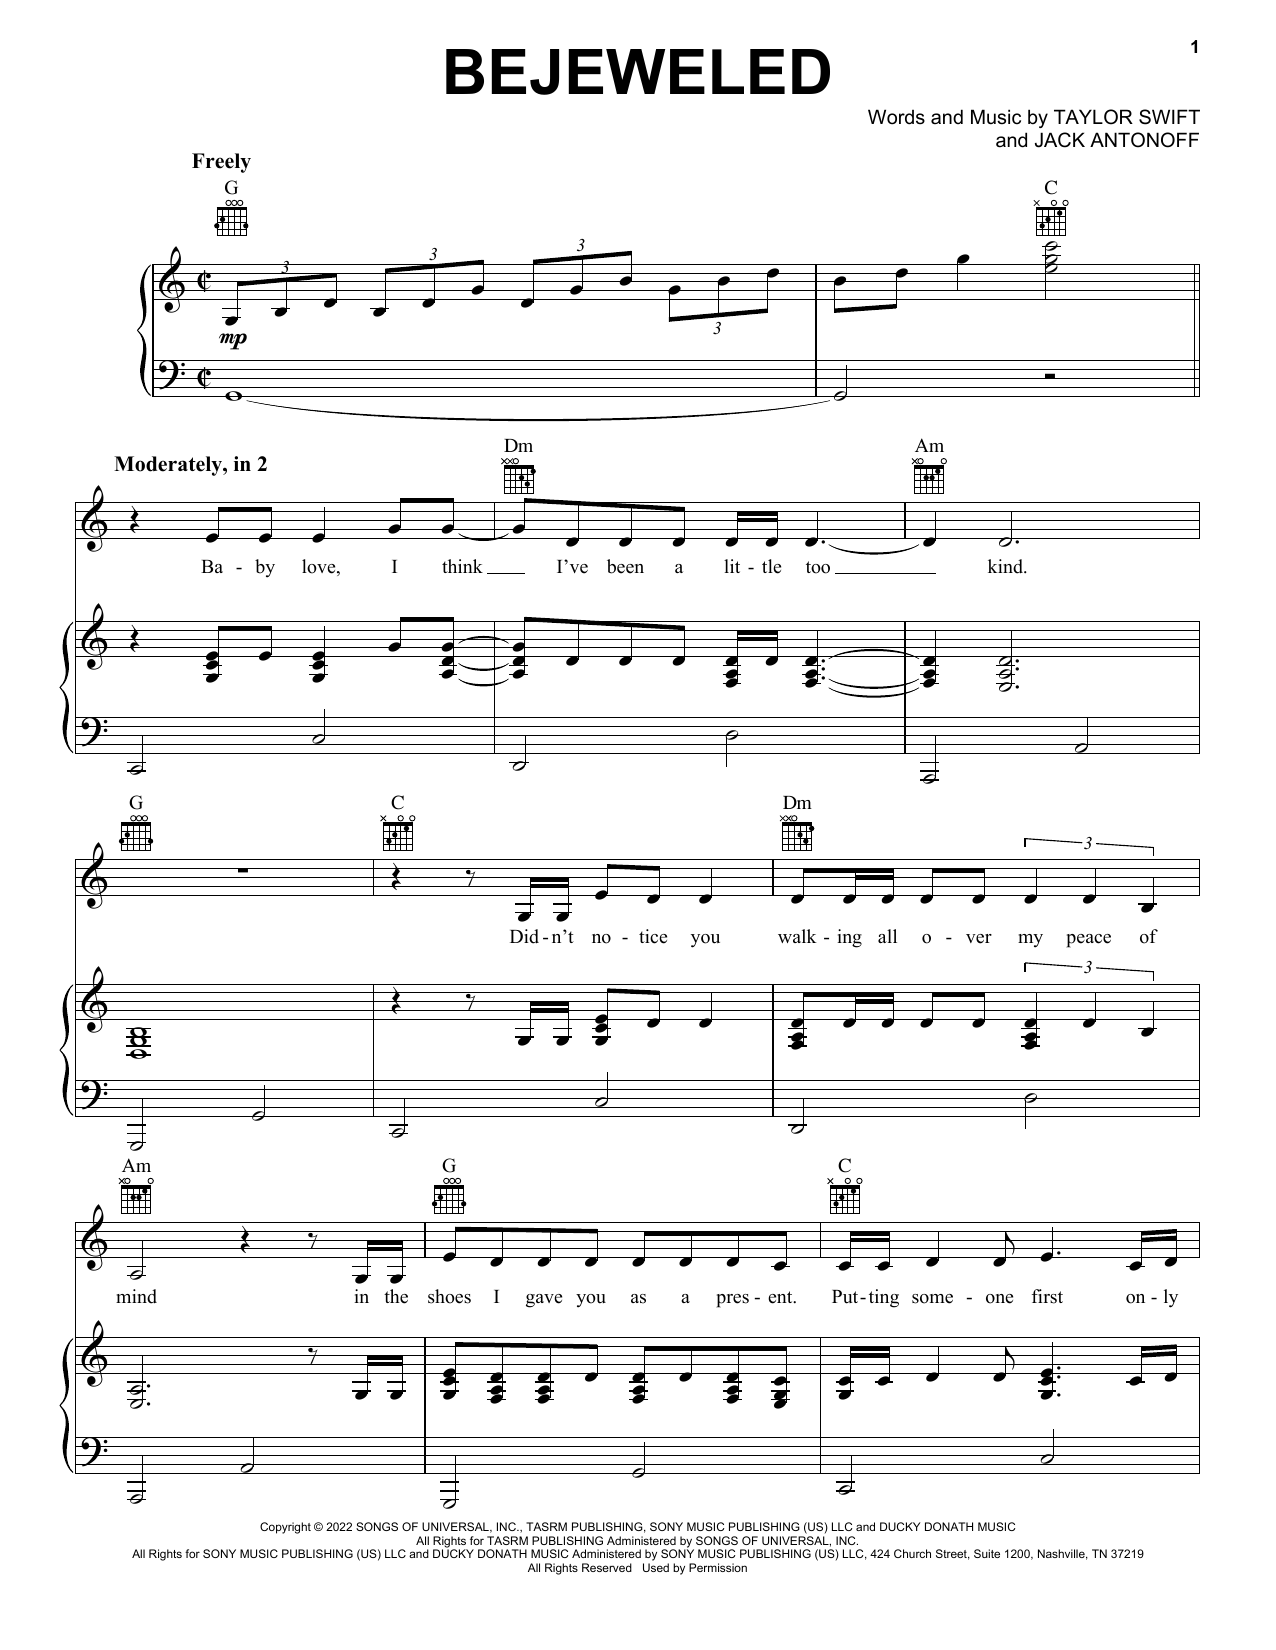 Glitch by Taylor Swift - Piano, Vocal, Guitar - Digital Sheet